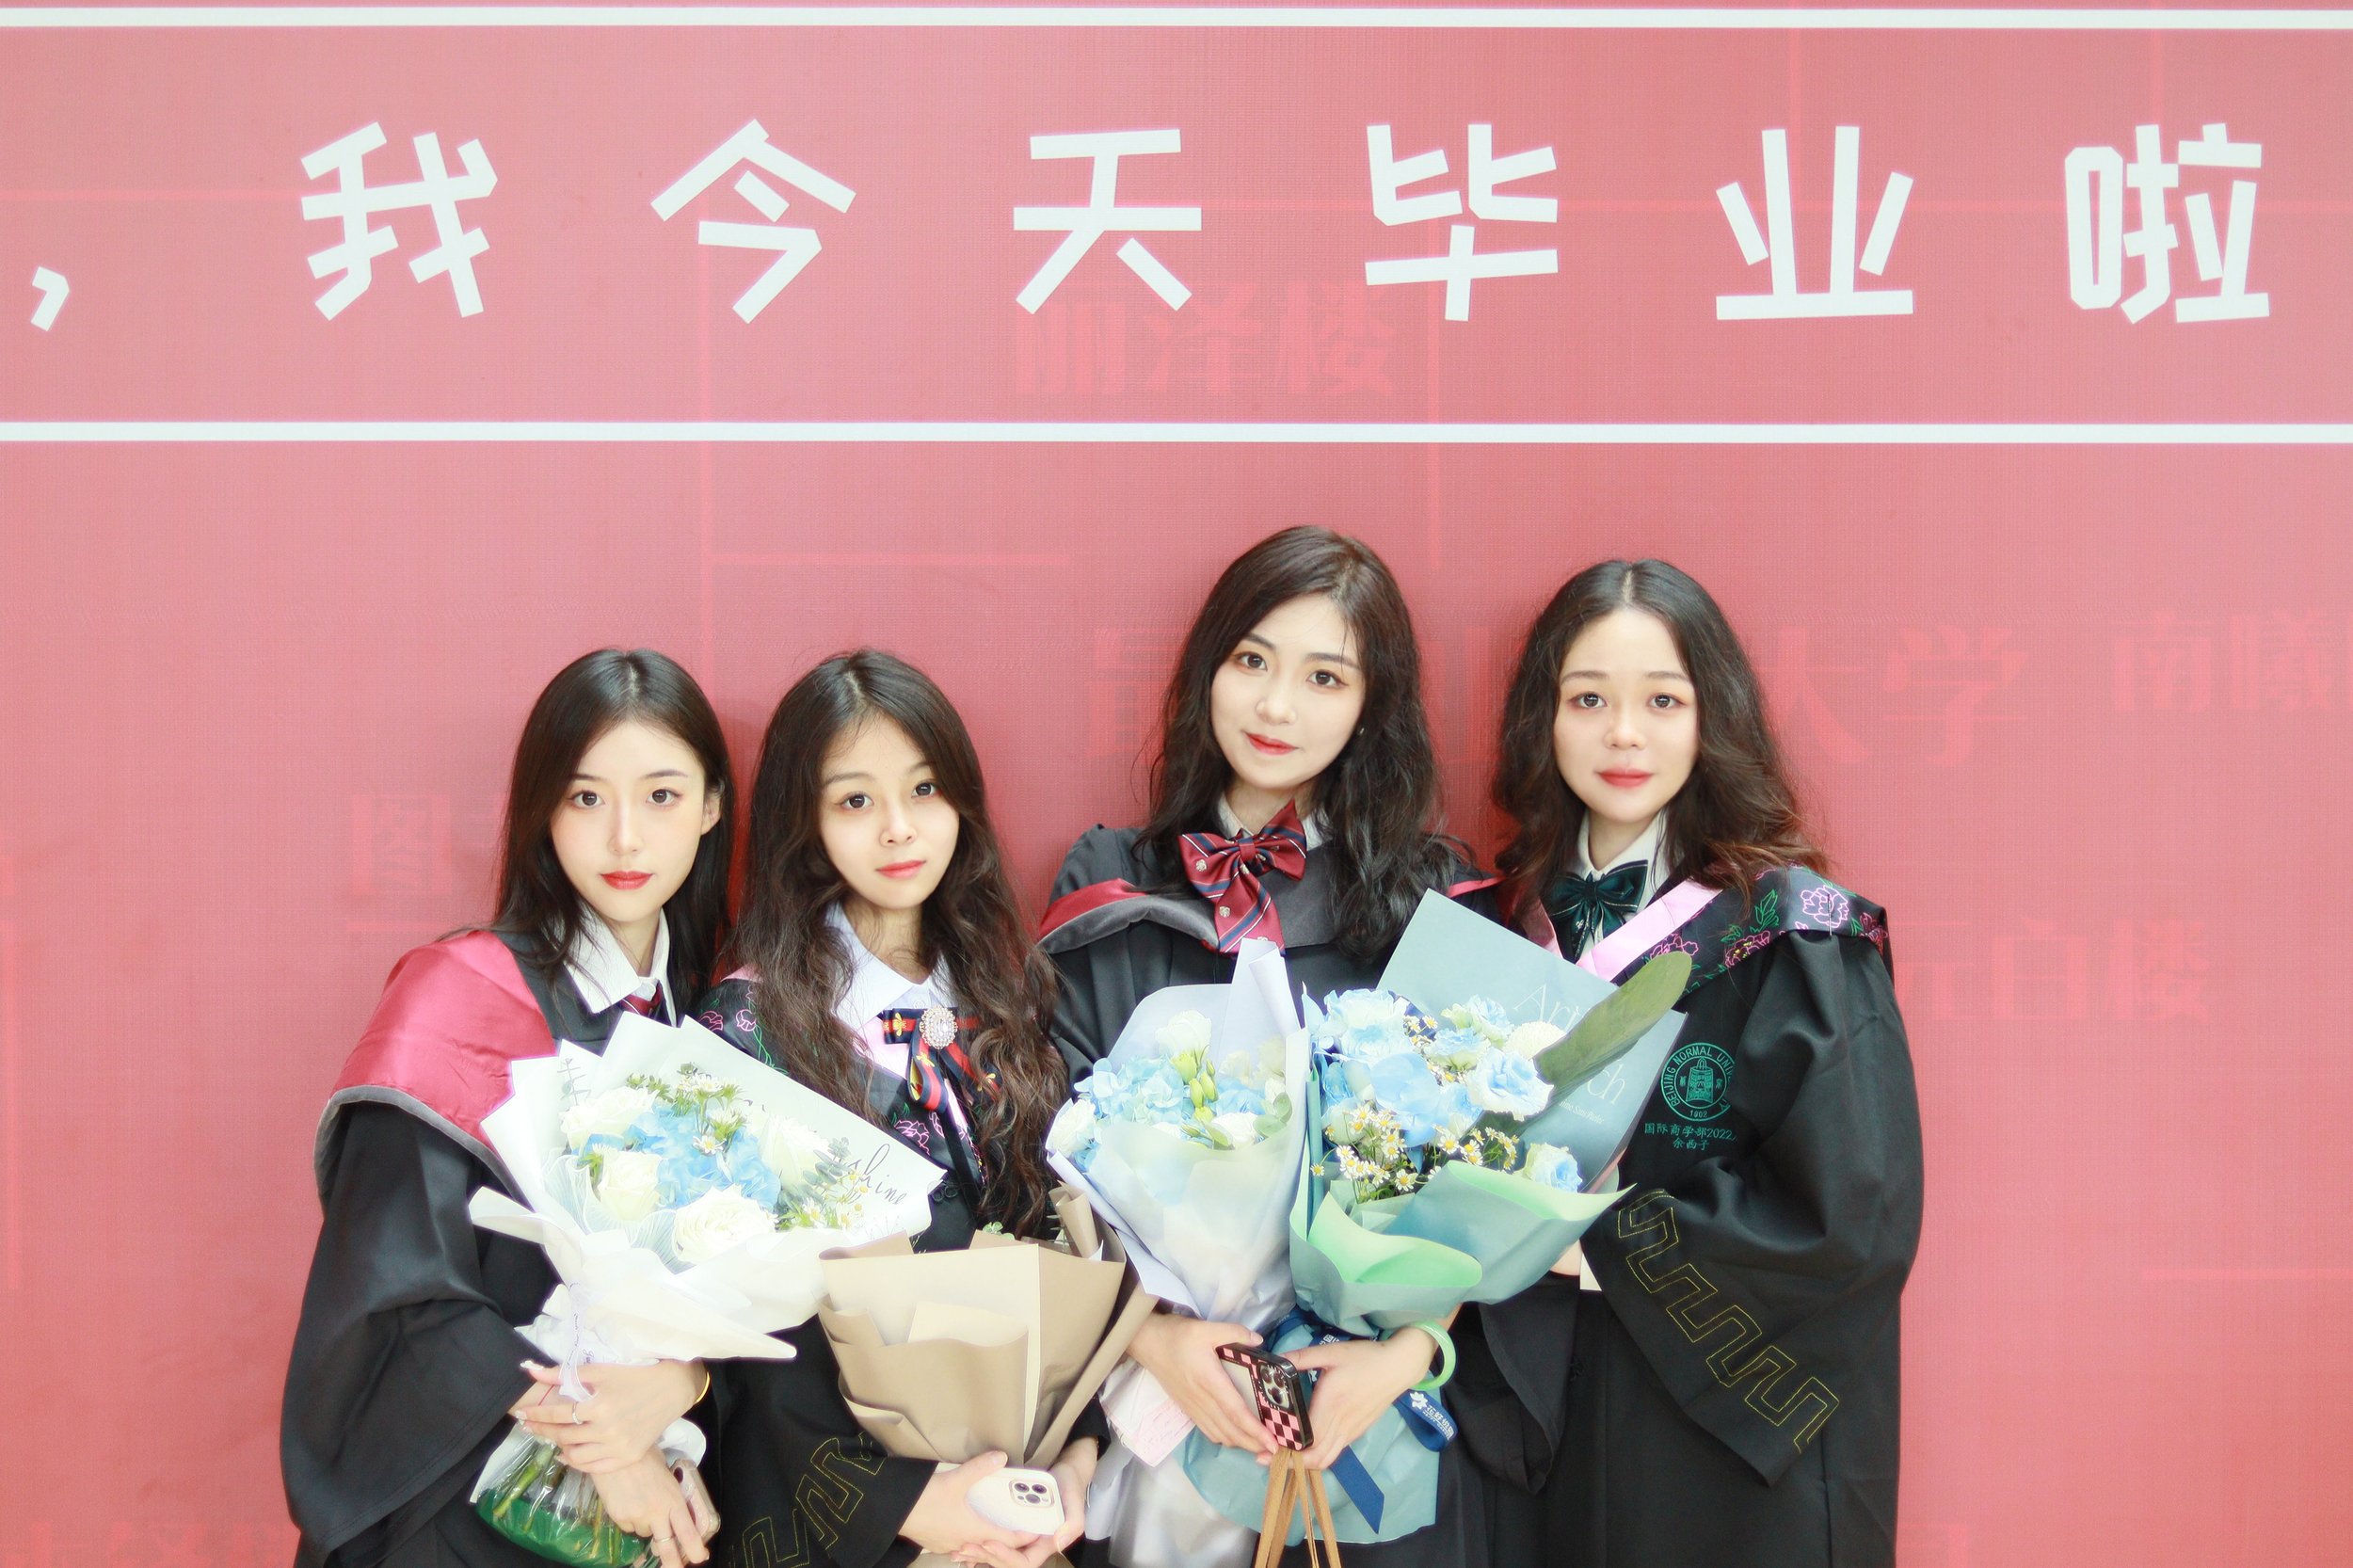  A group of friends celebrate their successful completion of the BNUZ-SMU Joint BComm Program at Beijing Normal University, Zhuhai. From left: Liu Xinran, Liu Jiaqi, Shi Jingyi and Yu Xizi.  